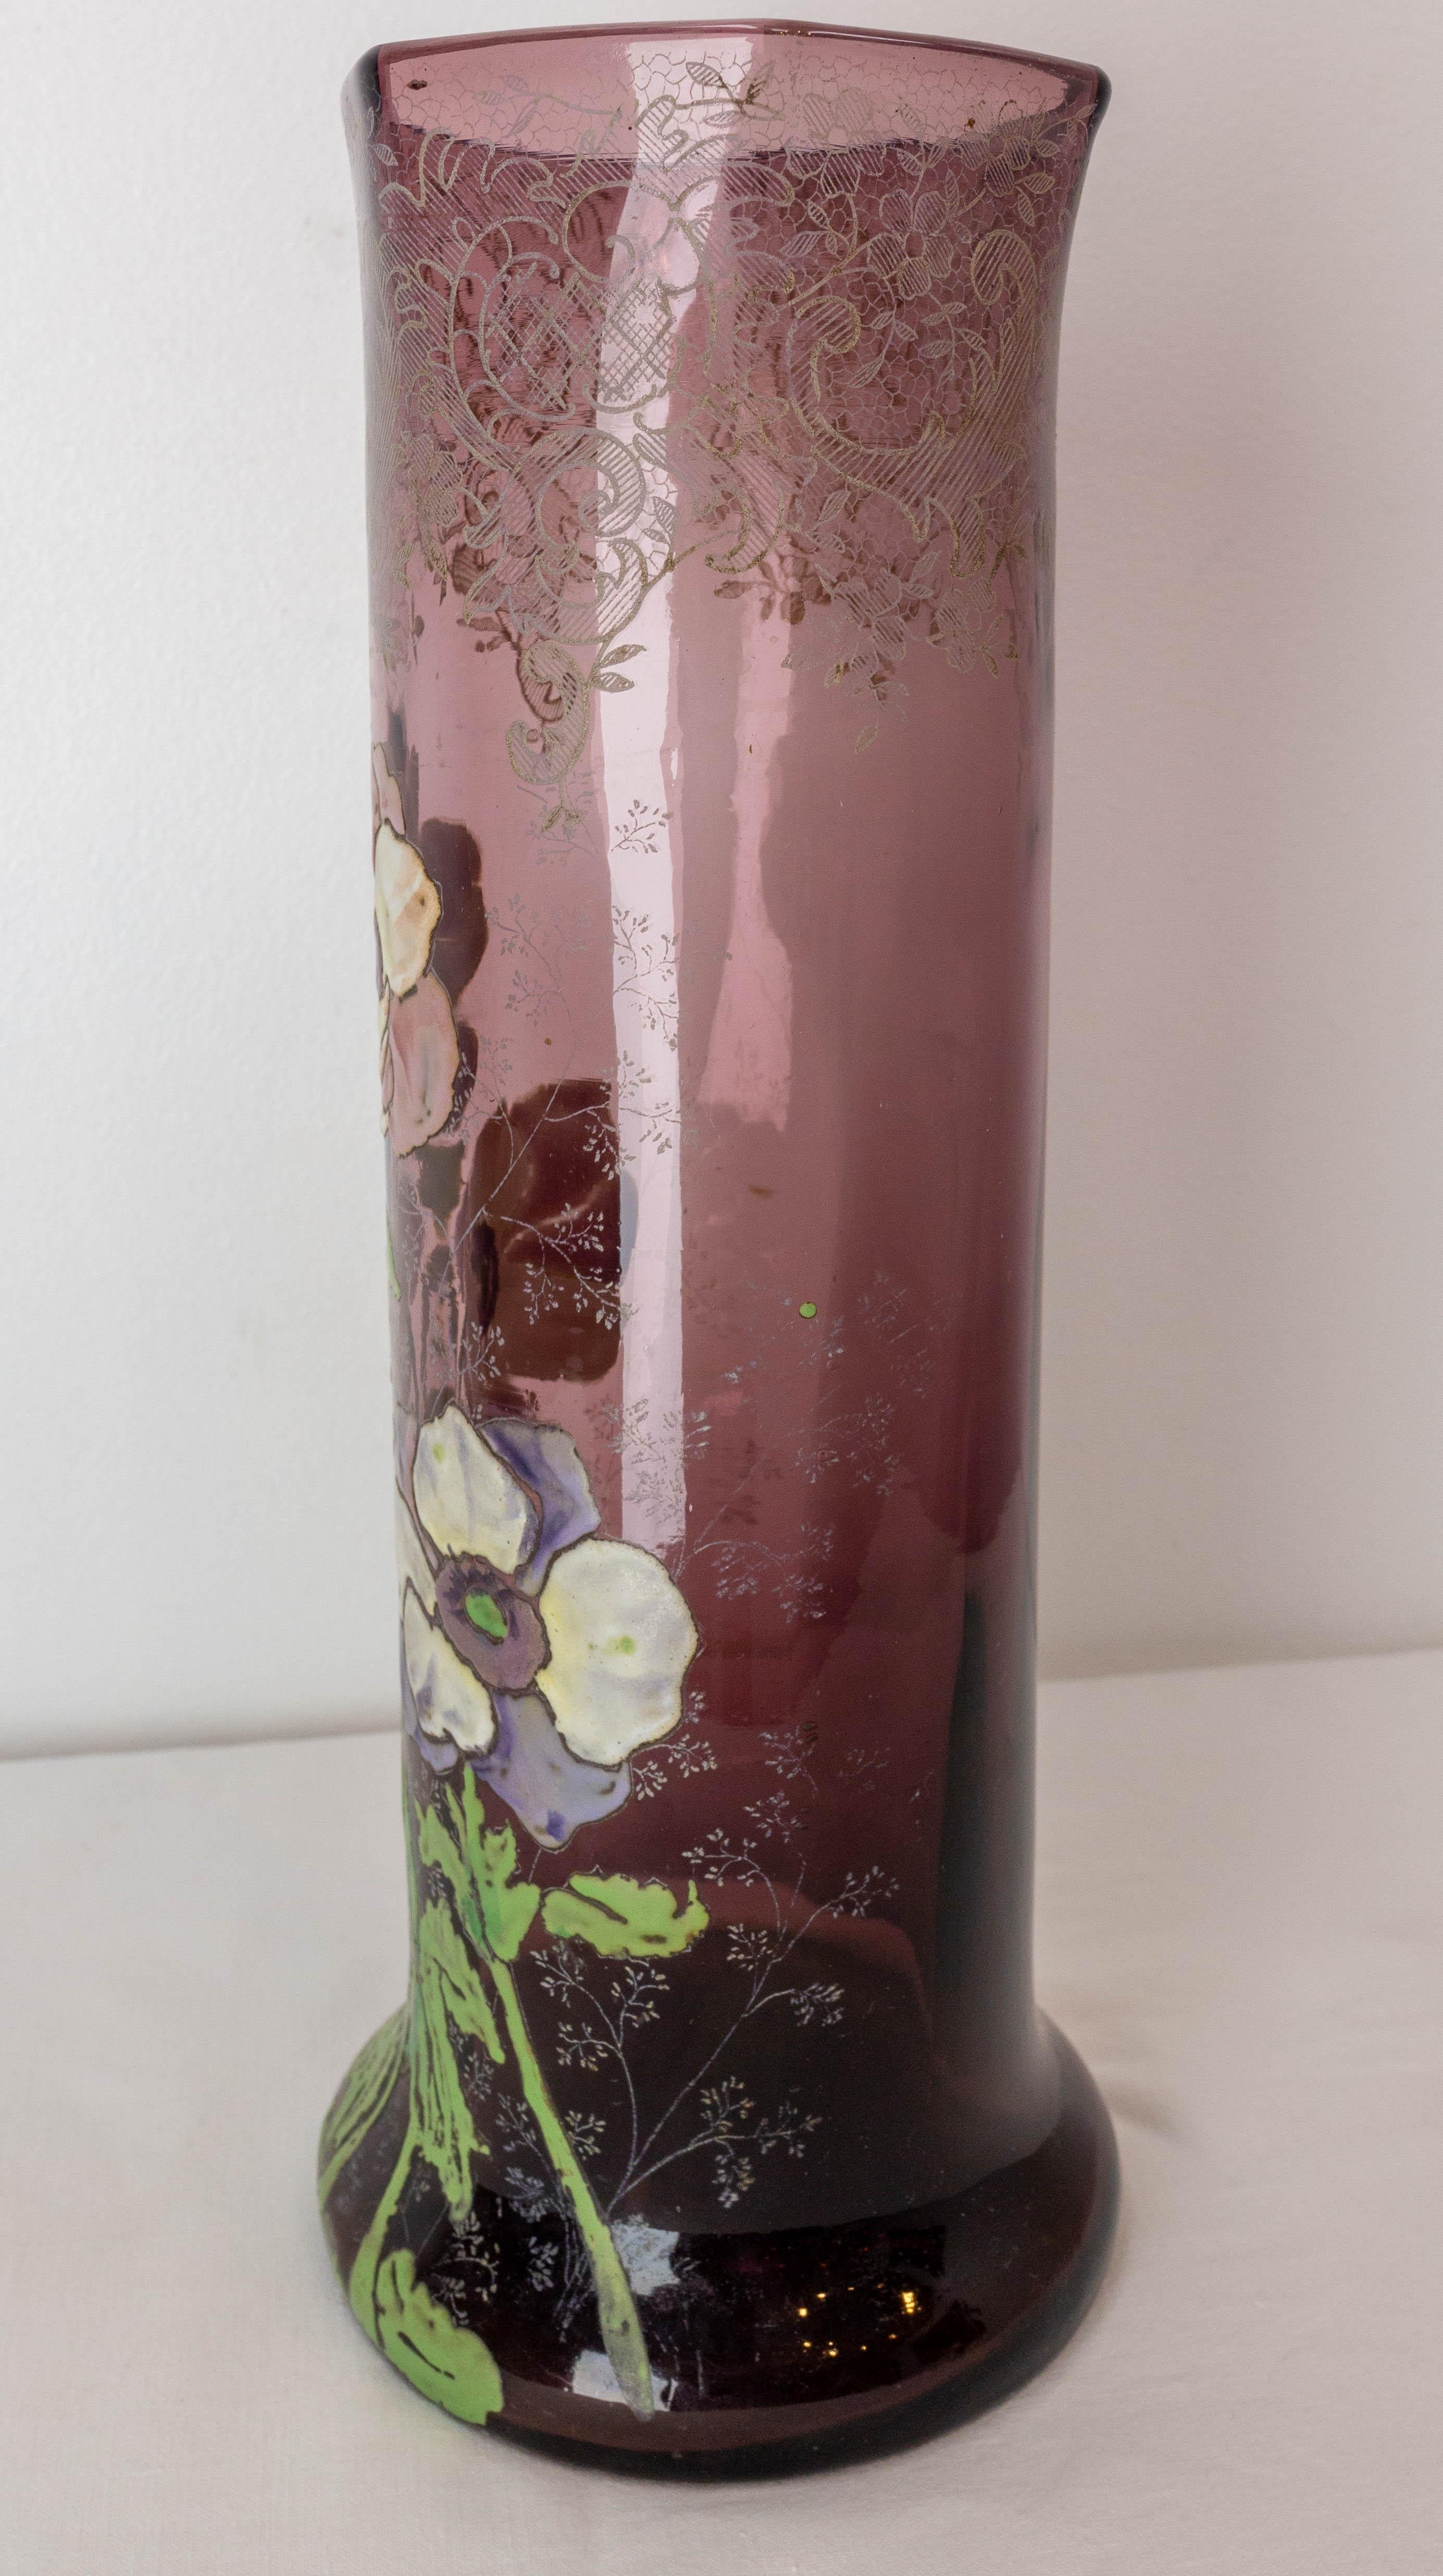 Enameled French Enamelled Glass Vase with Flowers Decoration Legras Art Nouveau, c. 1900 For Sale